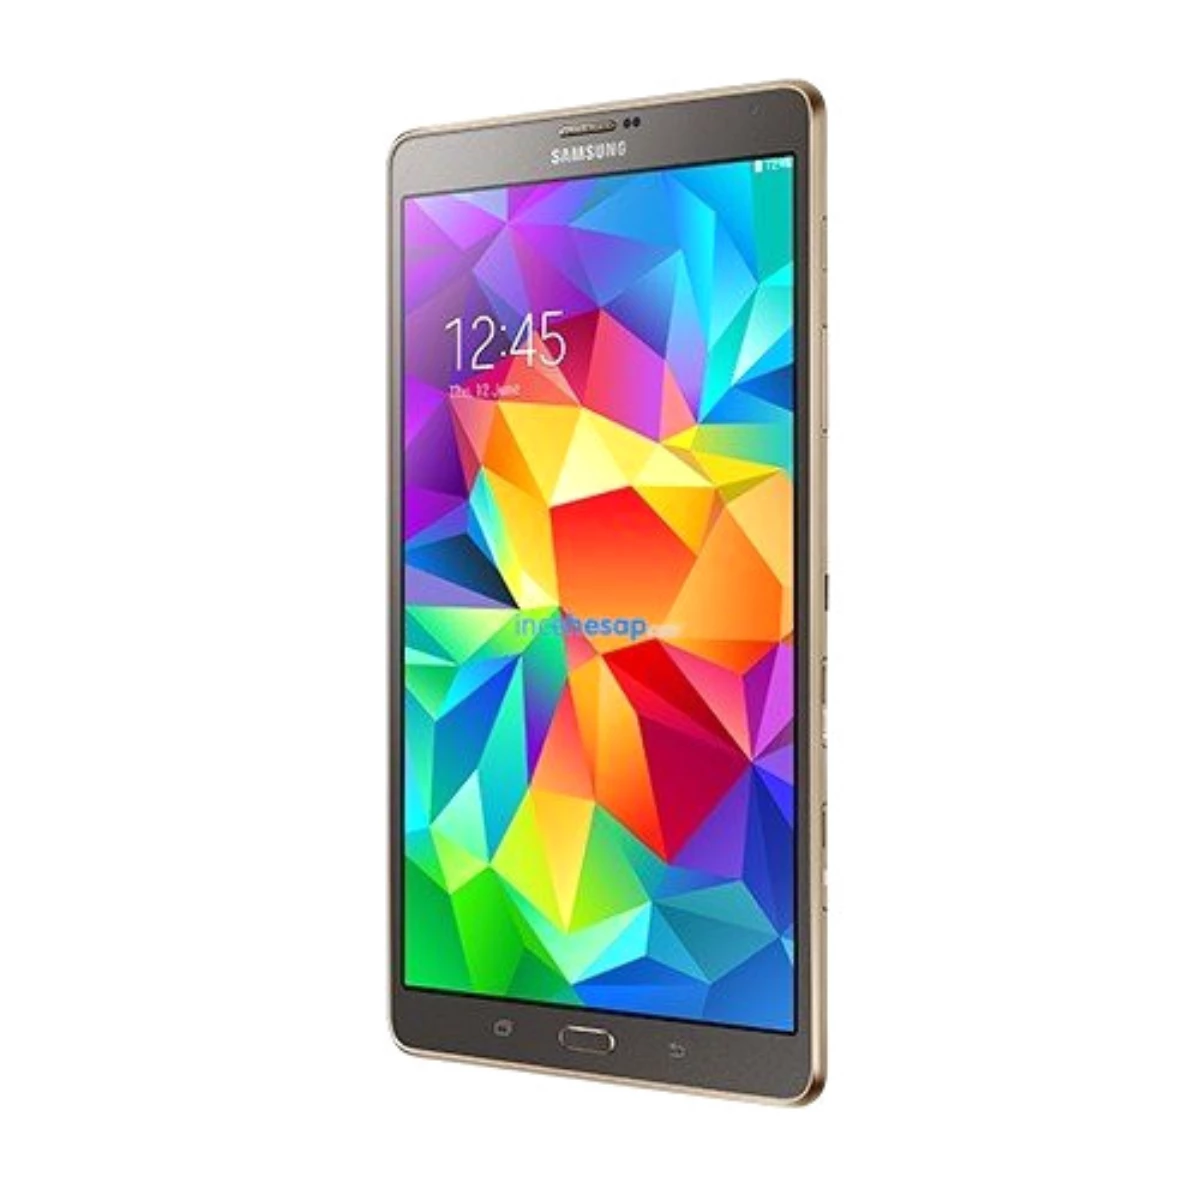 Samsung Galaxy Tab S T700 16gb 8.4" Titan Tablet